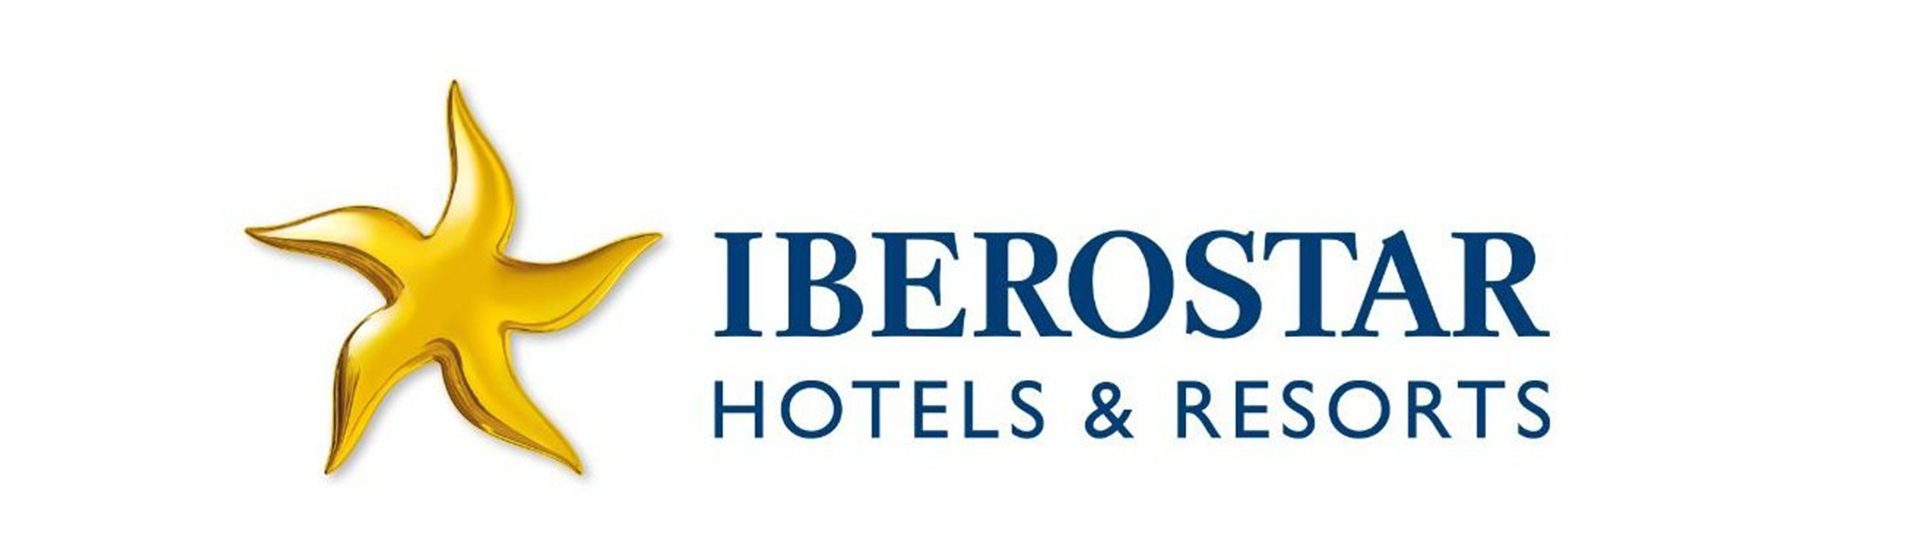 Logotipo Hoteles Iberostar Cuba